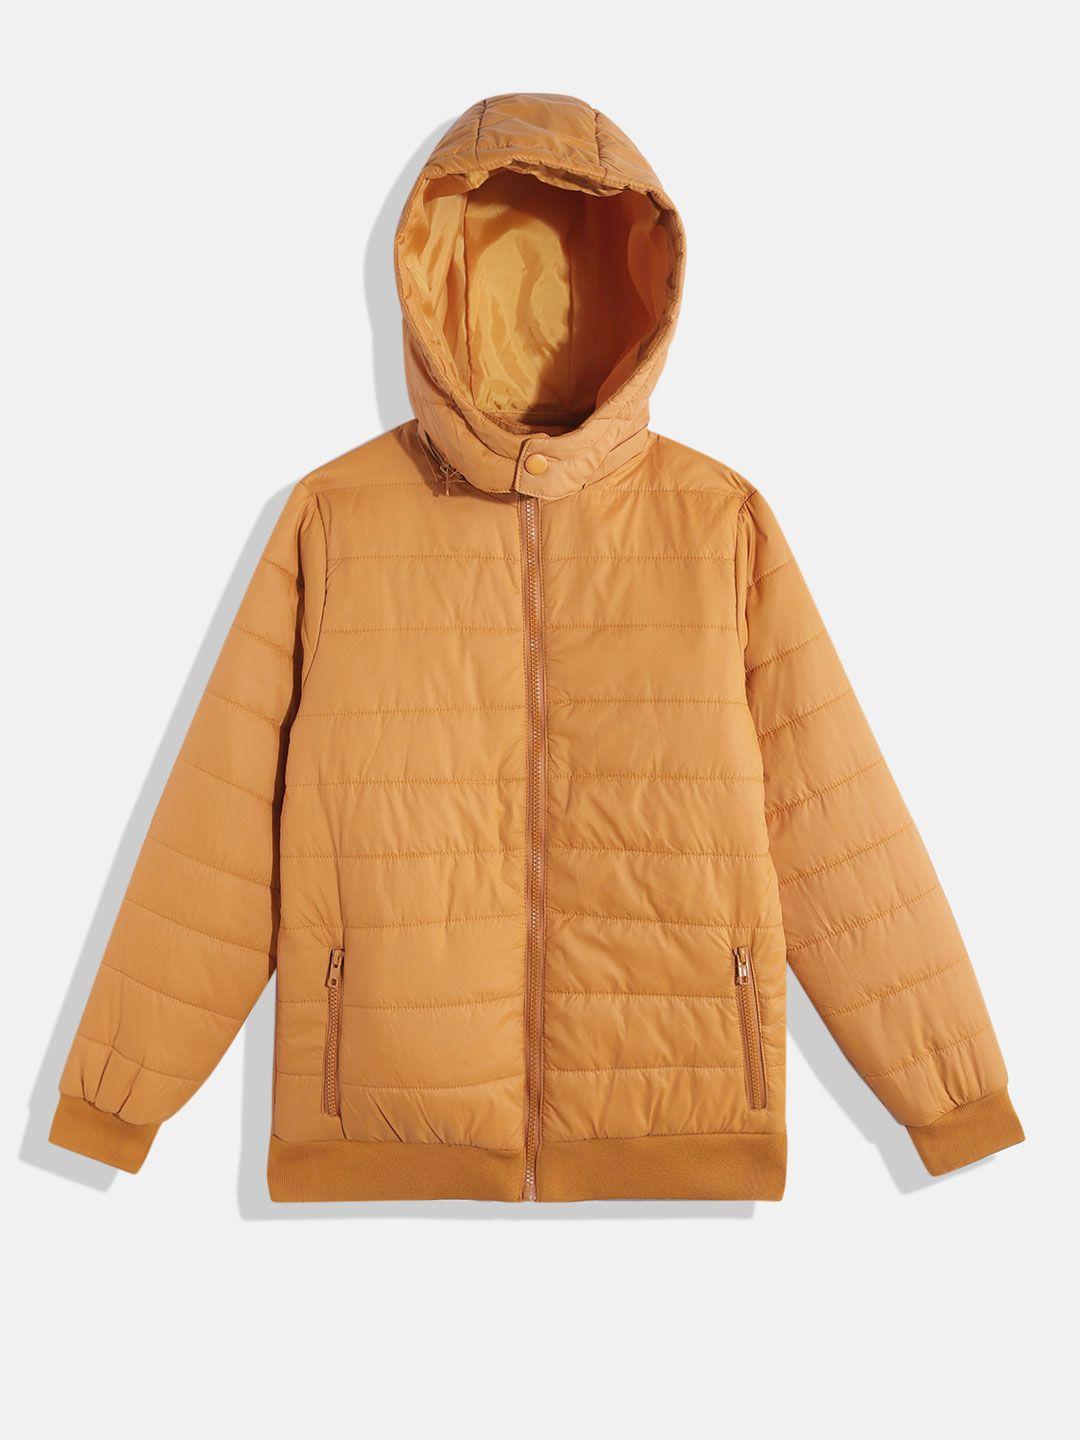 kook n keech teens boys orange solid detachable hood bomber jacket